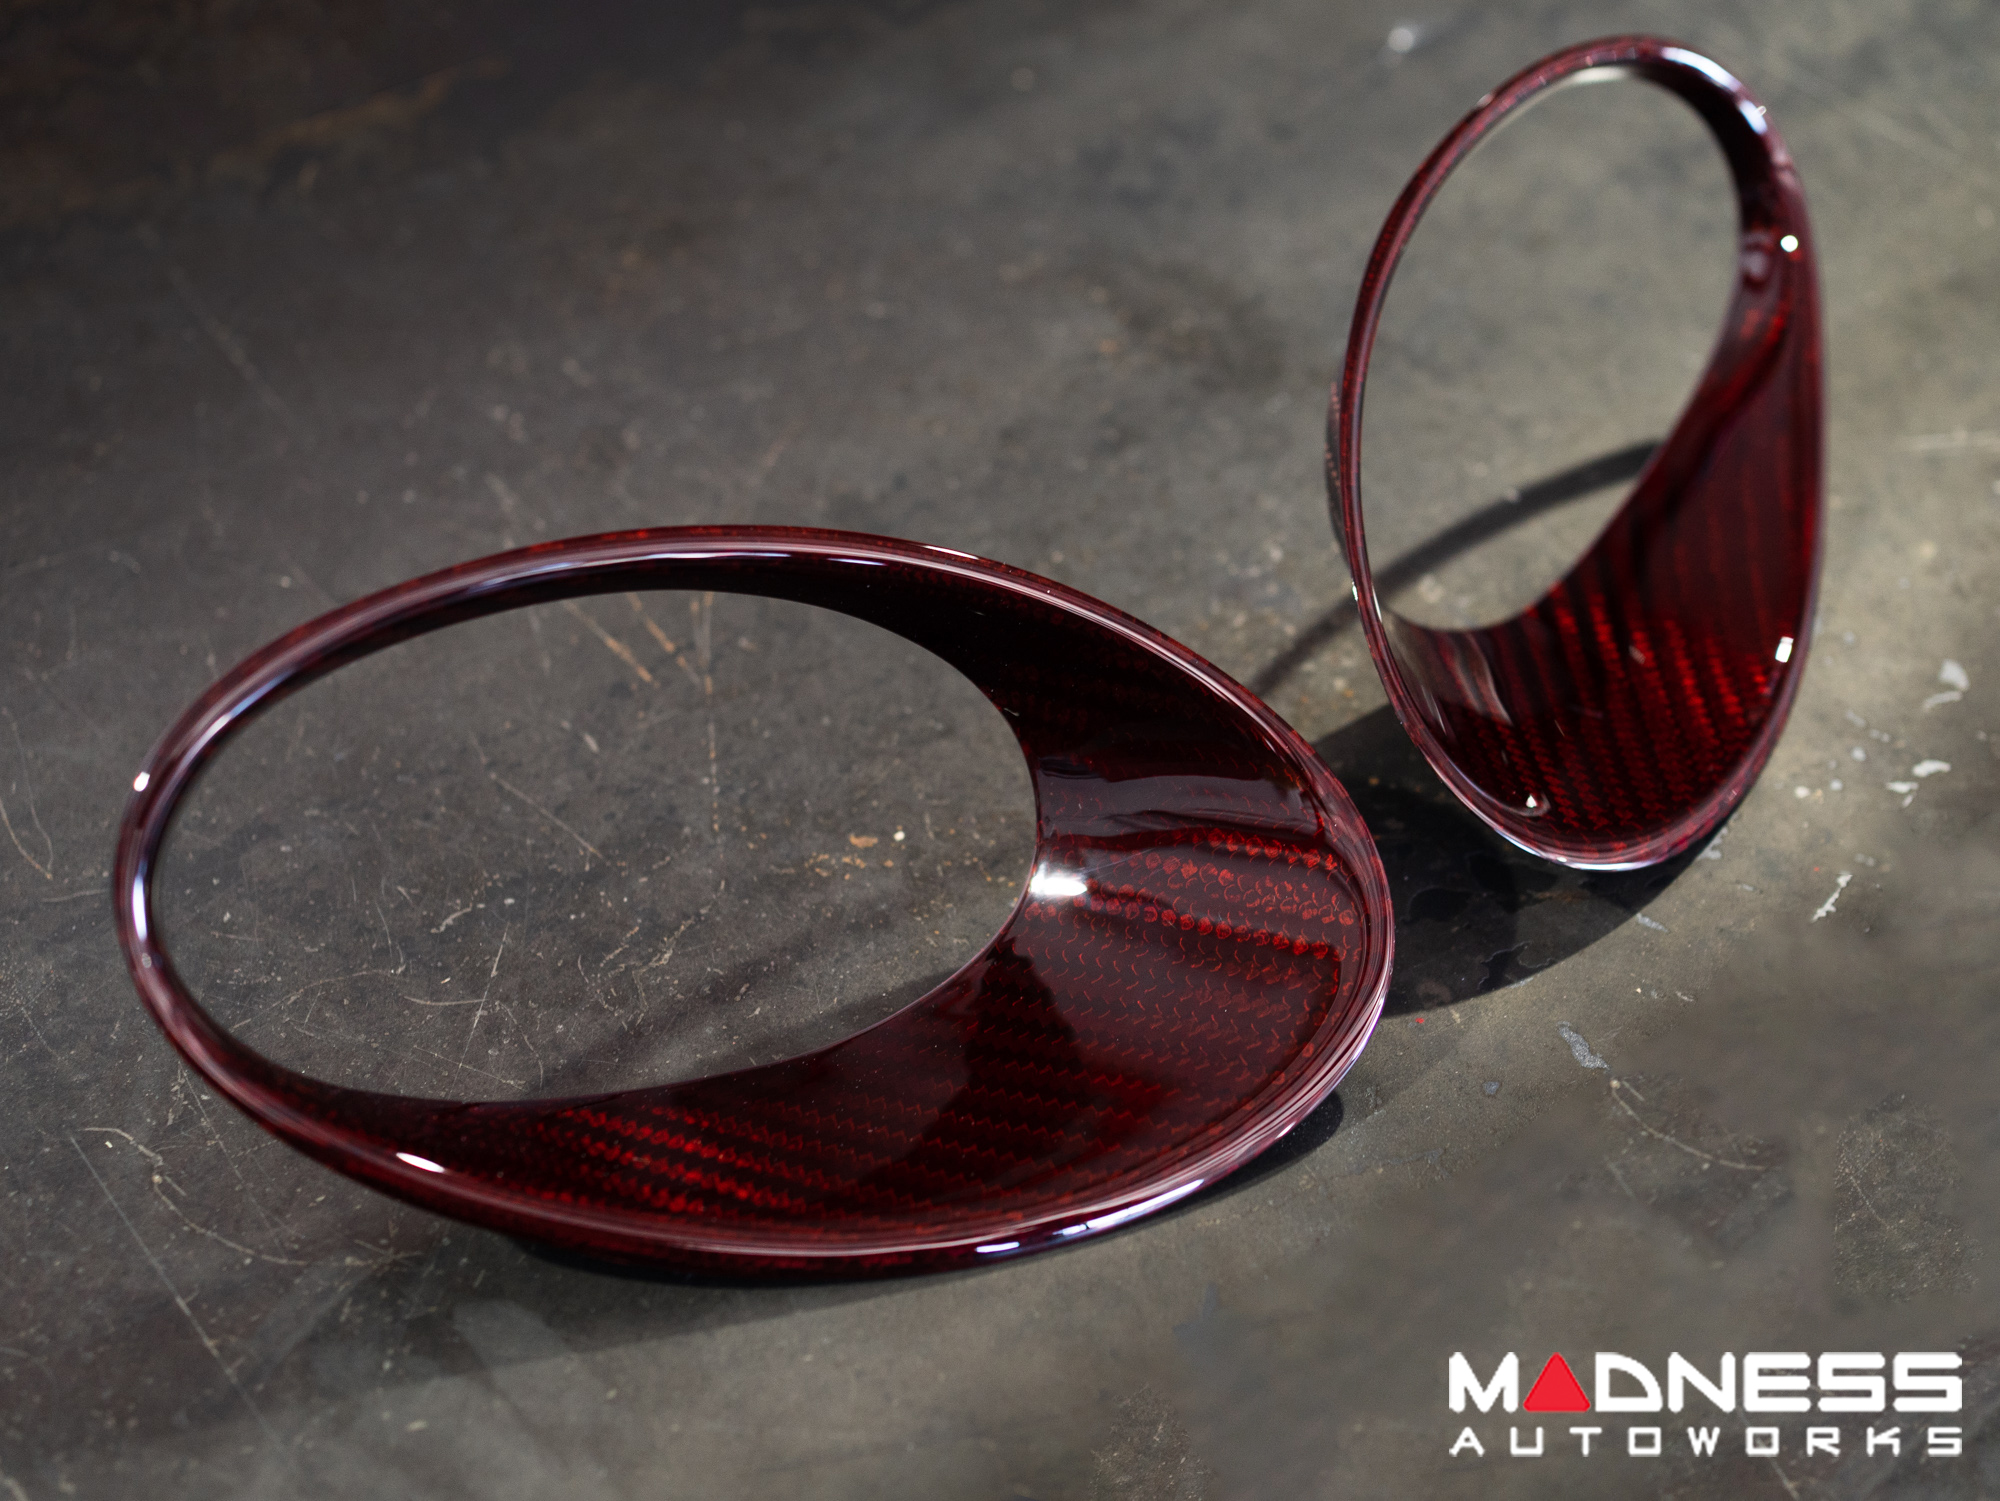  FIAT 500 Driving Lights Frames - Carbon Fiber - NA Model - Red Candy Finish